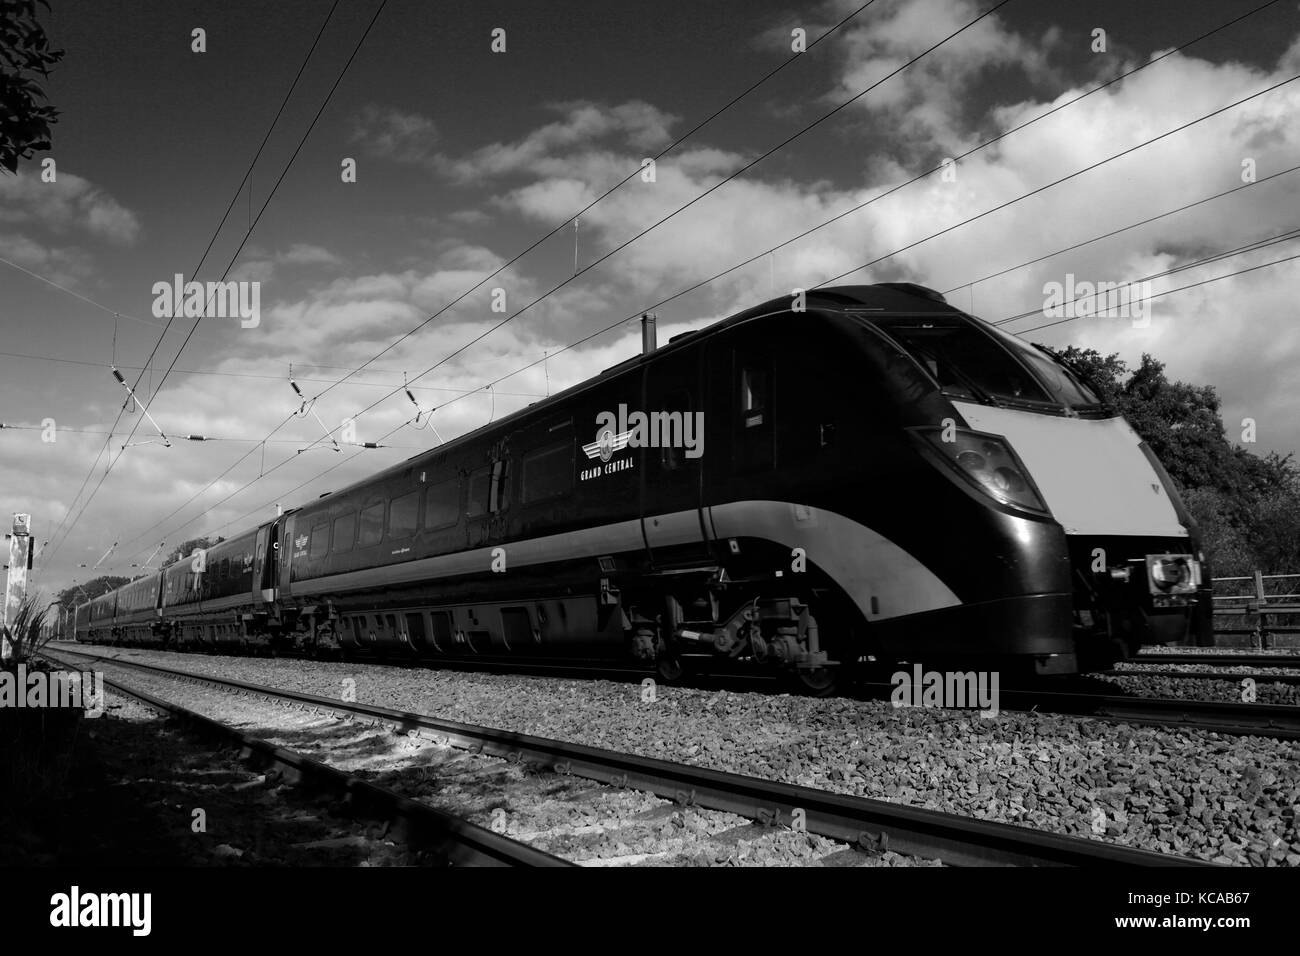 180 Zephyr class, Grand Central Trains, High Speed Diesel Train, East Coast Main Line Railway, Peterborough, Cambridgeshire, England, UK Stock Photo